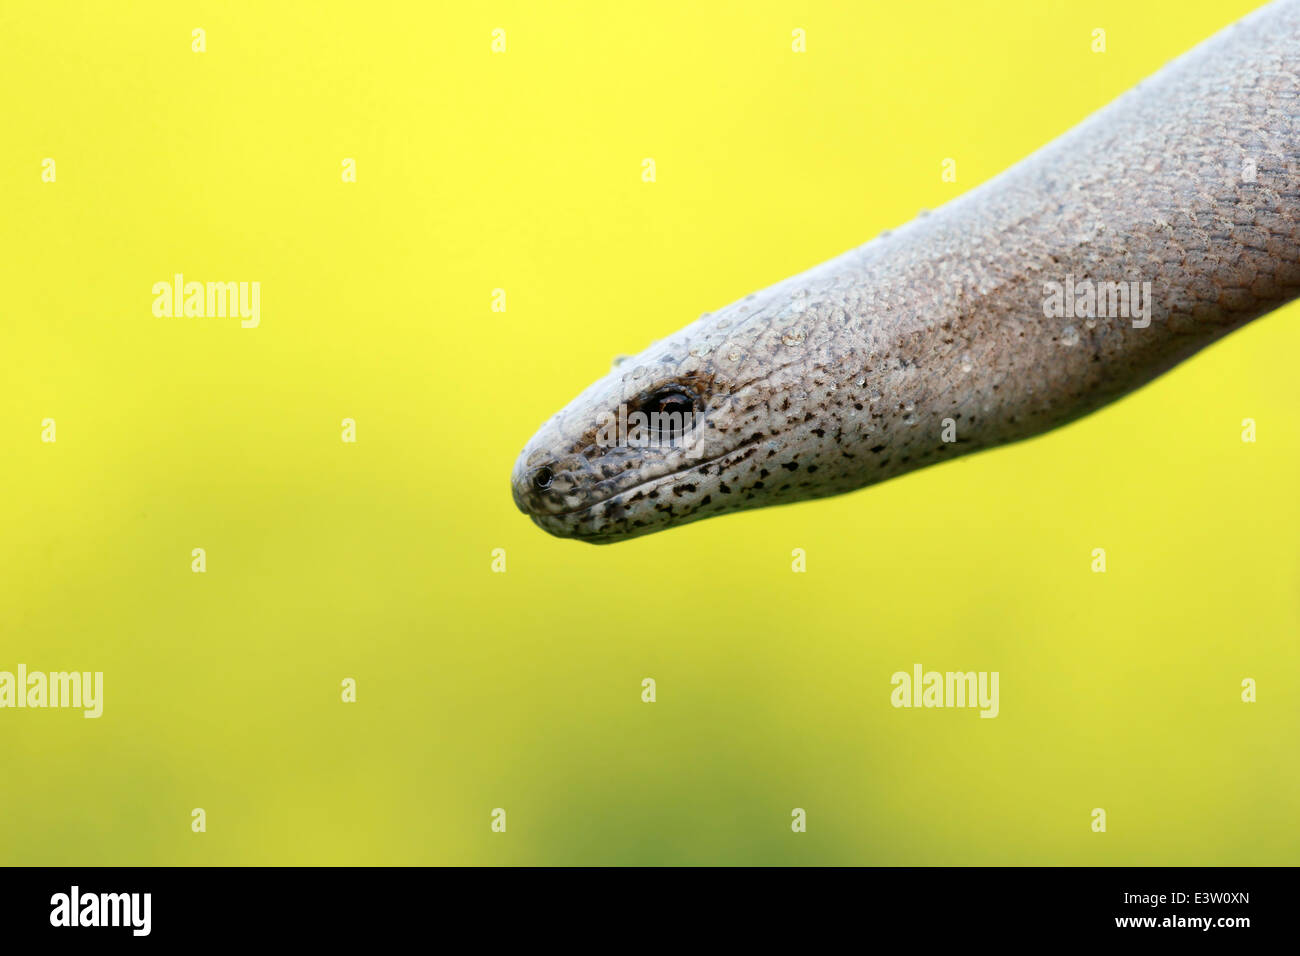 Slow worm, Anguis fragilis, single reptile, Warwickshire, May 2014 Stock Photo